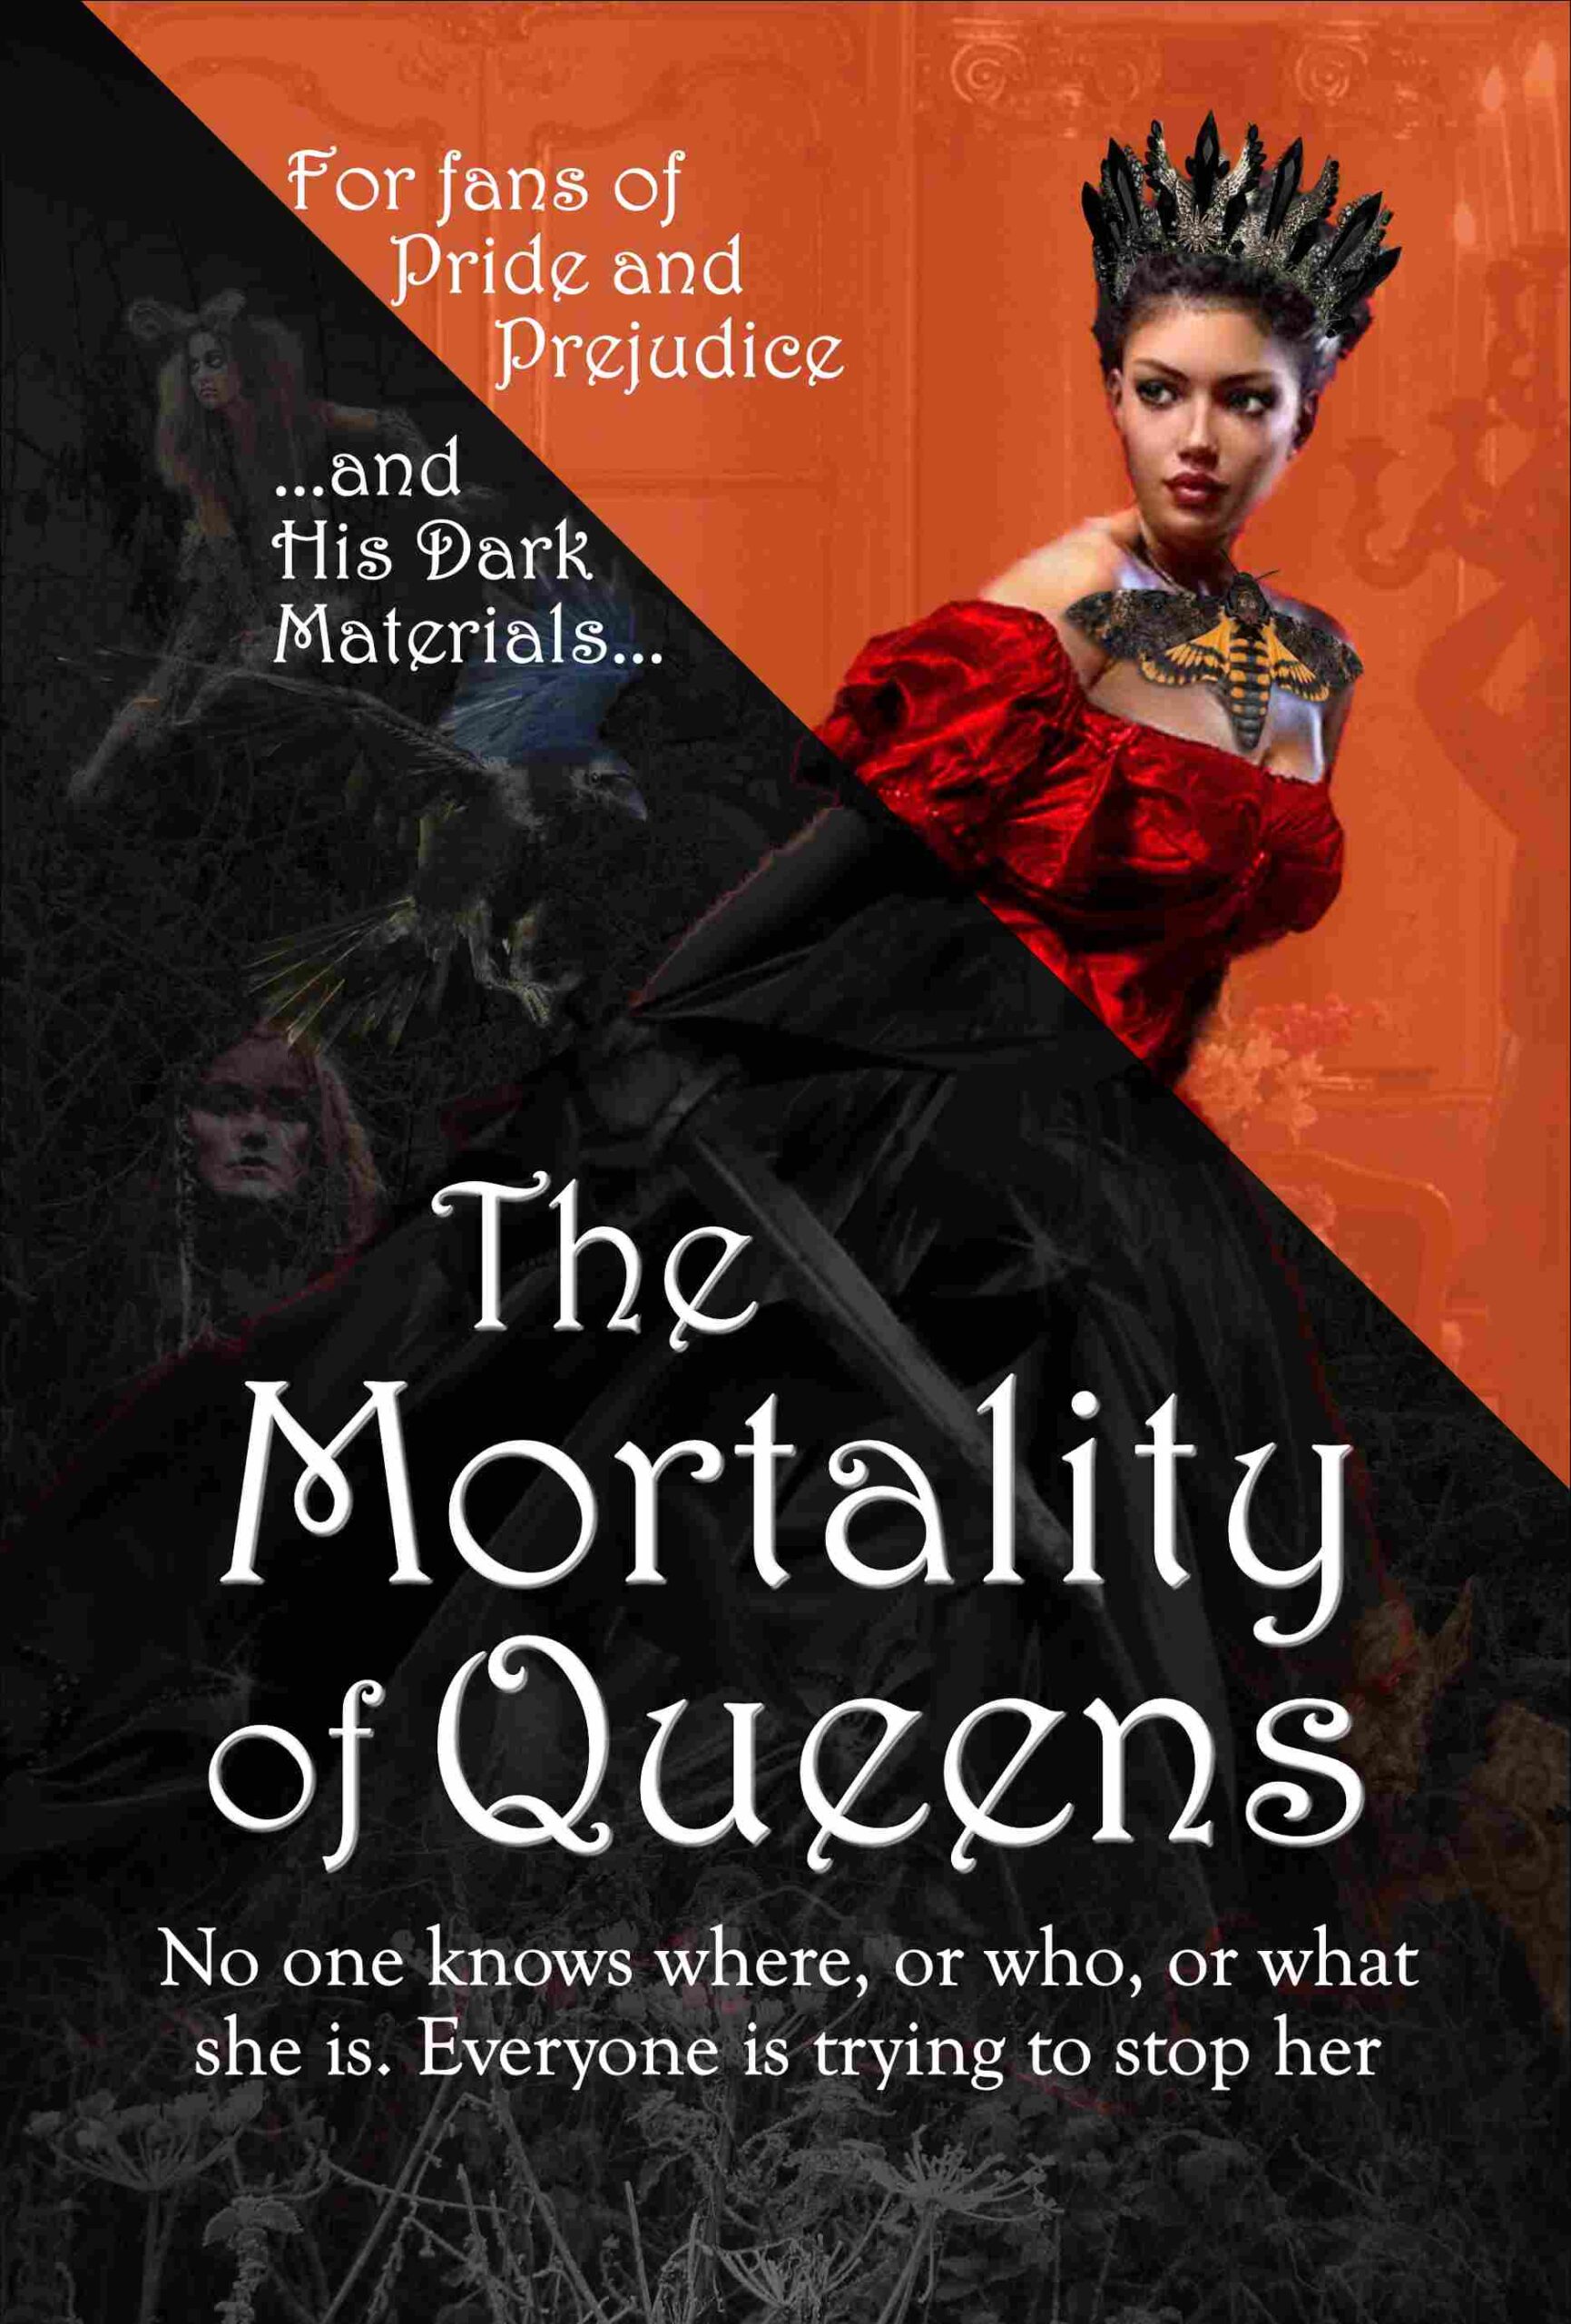 Mortality of Queens